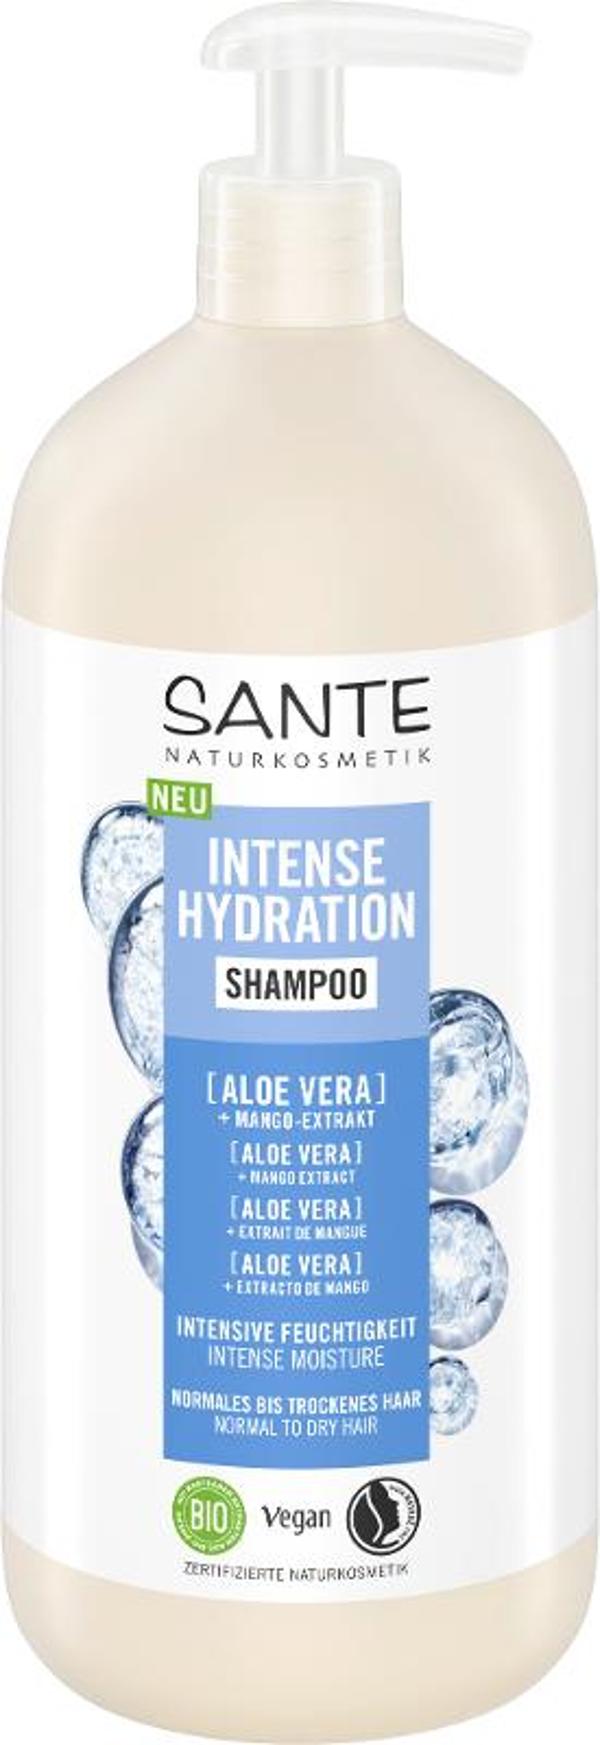 Produktfoto zu Intense Hydration Shampoo Hyaluron 950ml